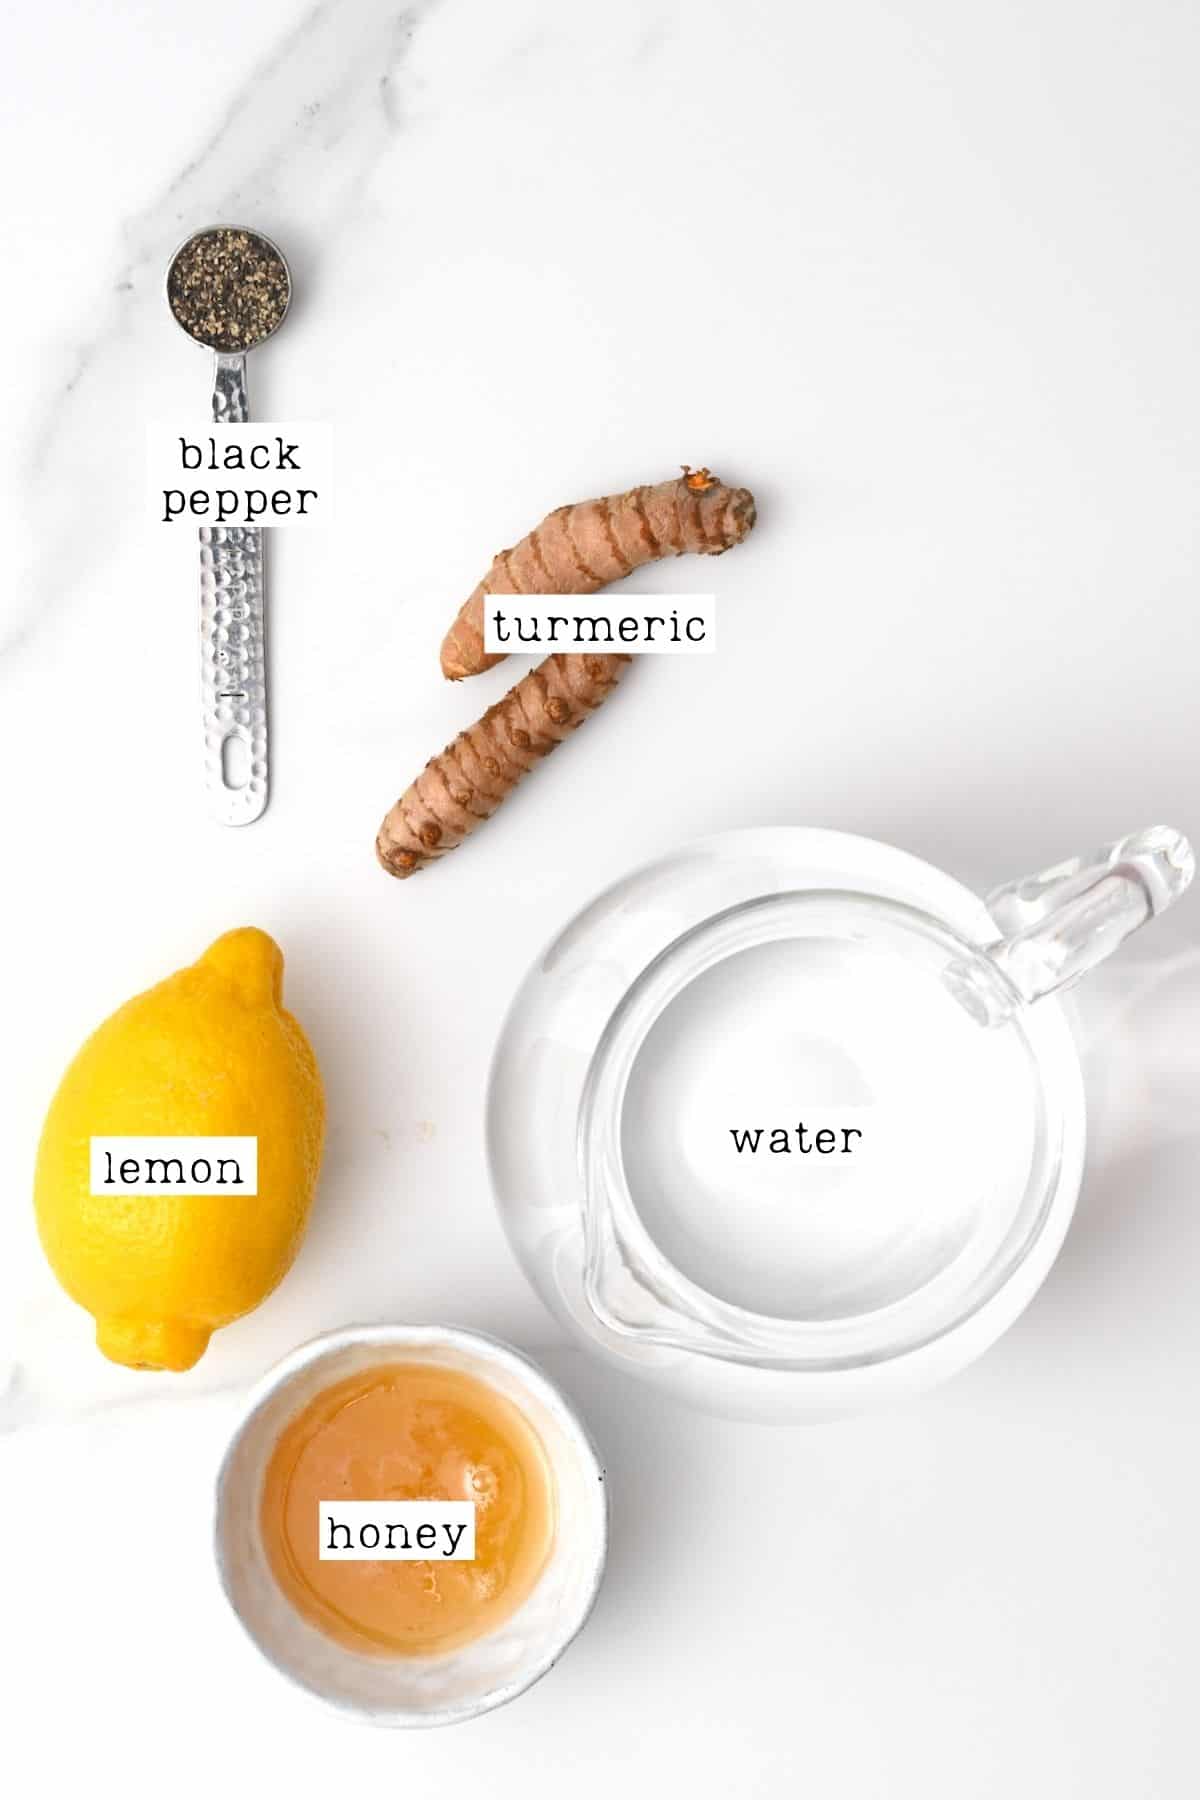 Ingredients for turmeric tea